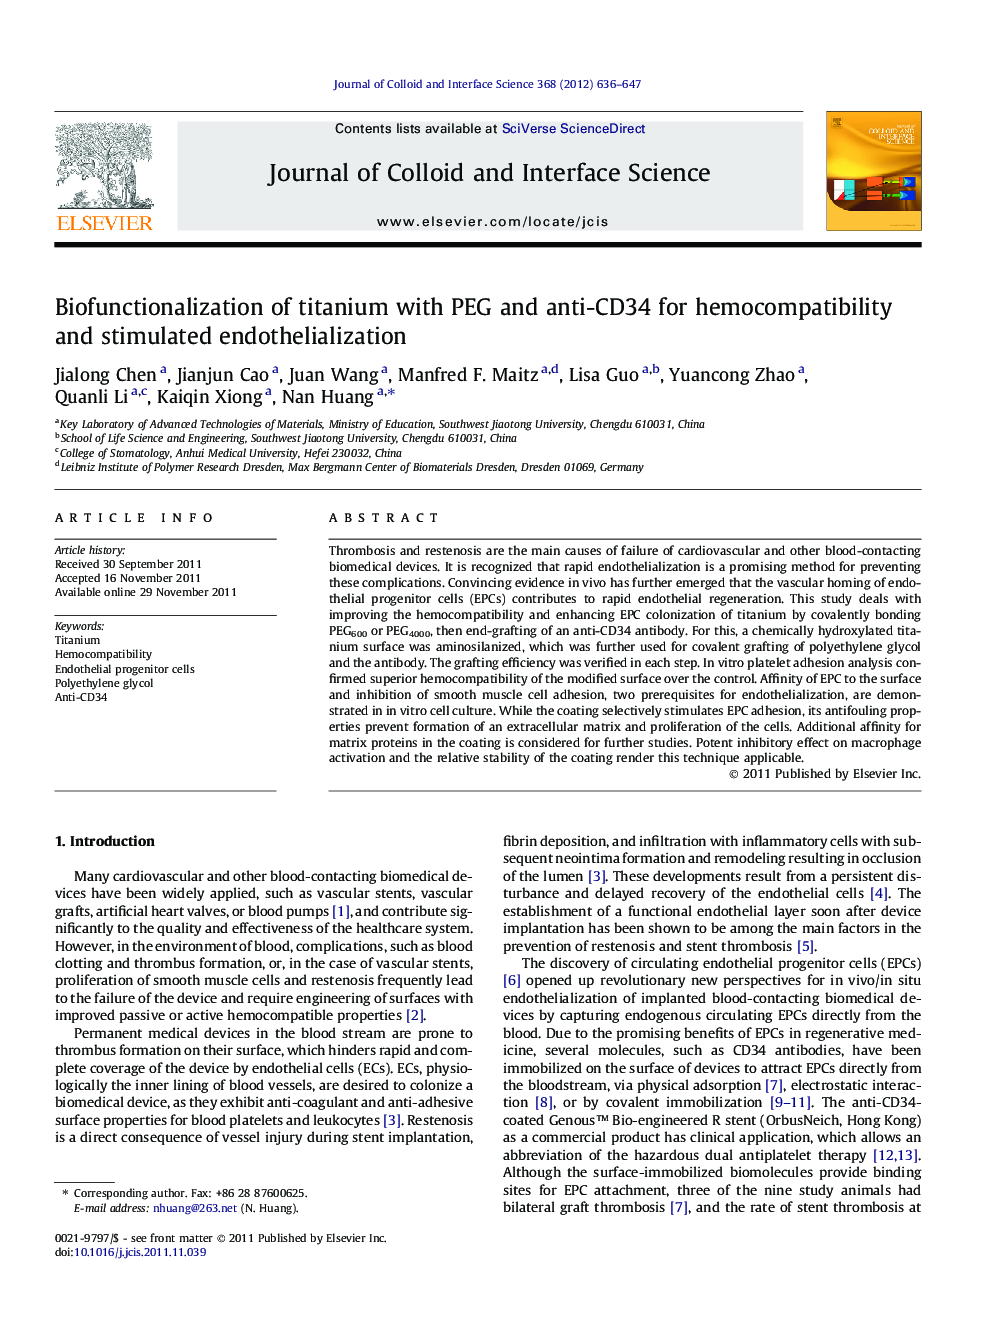 Biofunctionalization of titanium with PEG and anti-CD34 for hemocompatibility and stimulated endothelialization